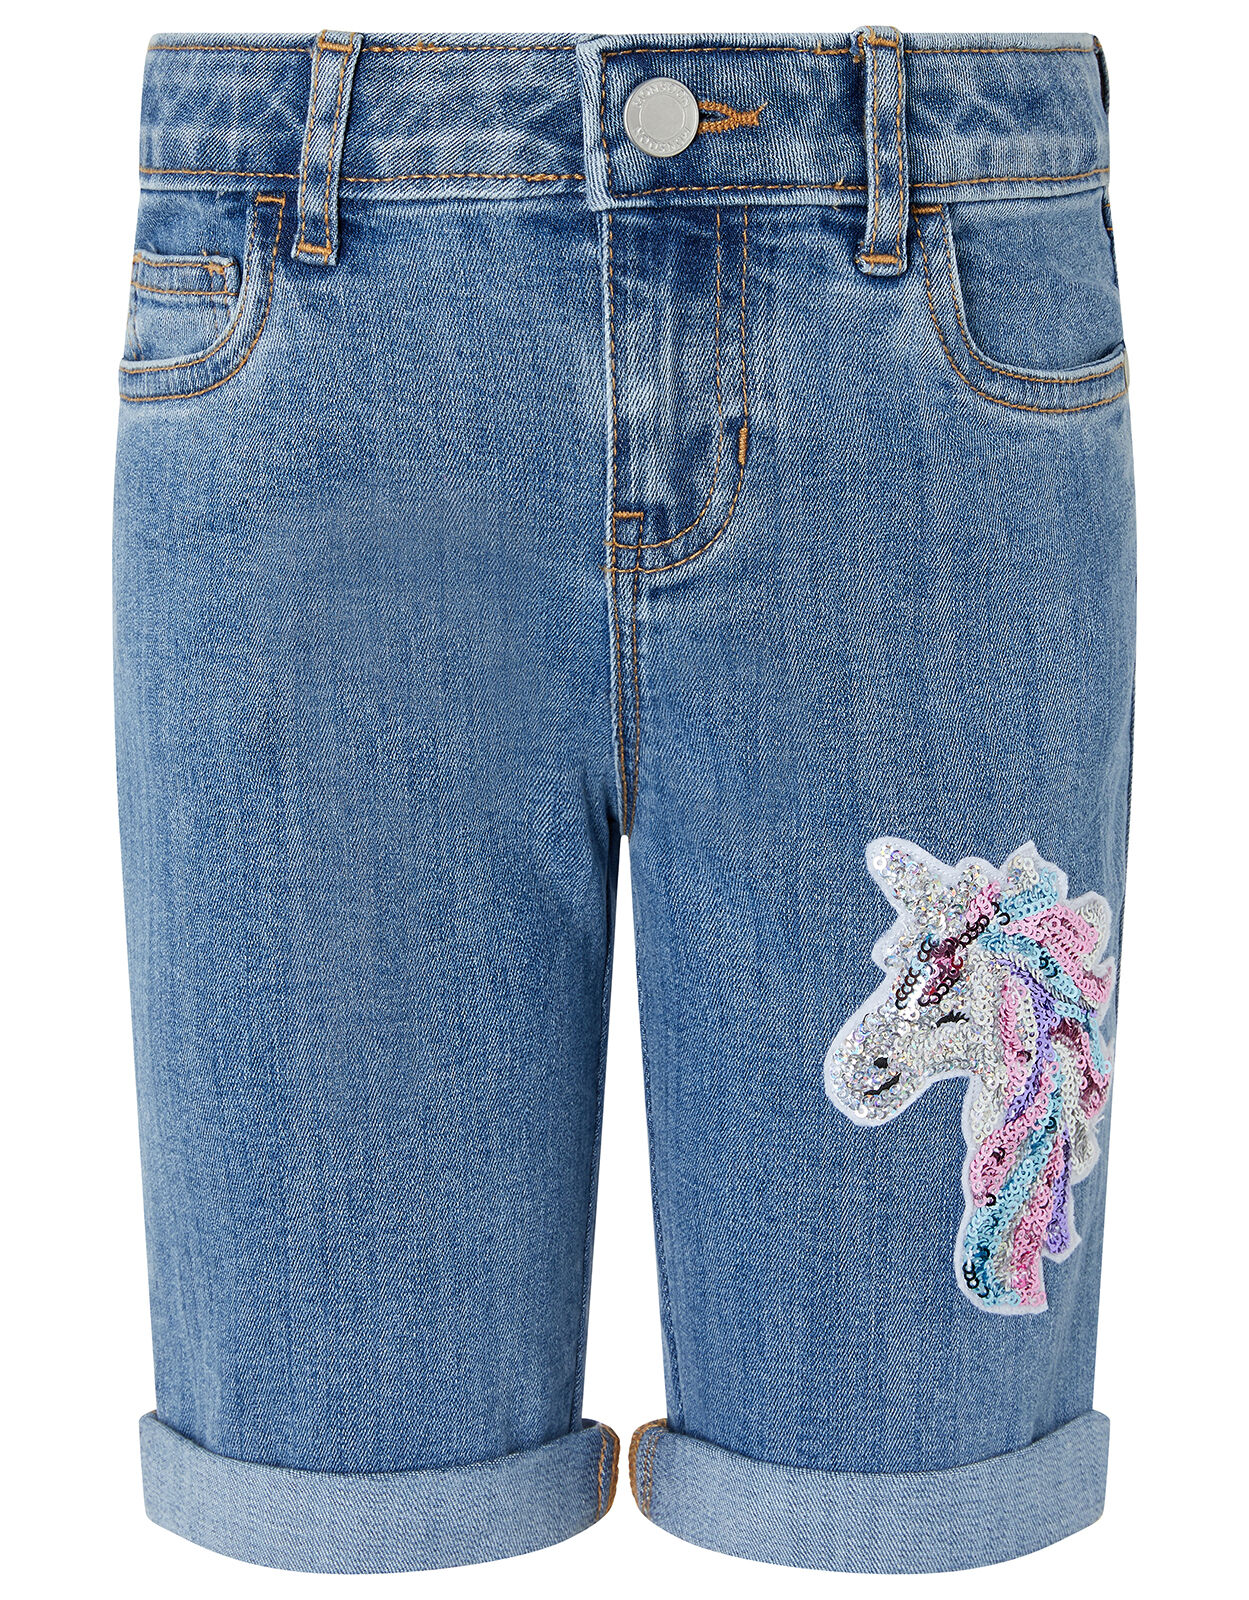 Girls Unicorn girls denim jean shorts blue 